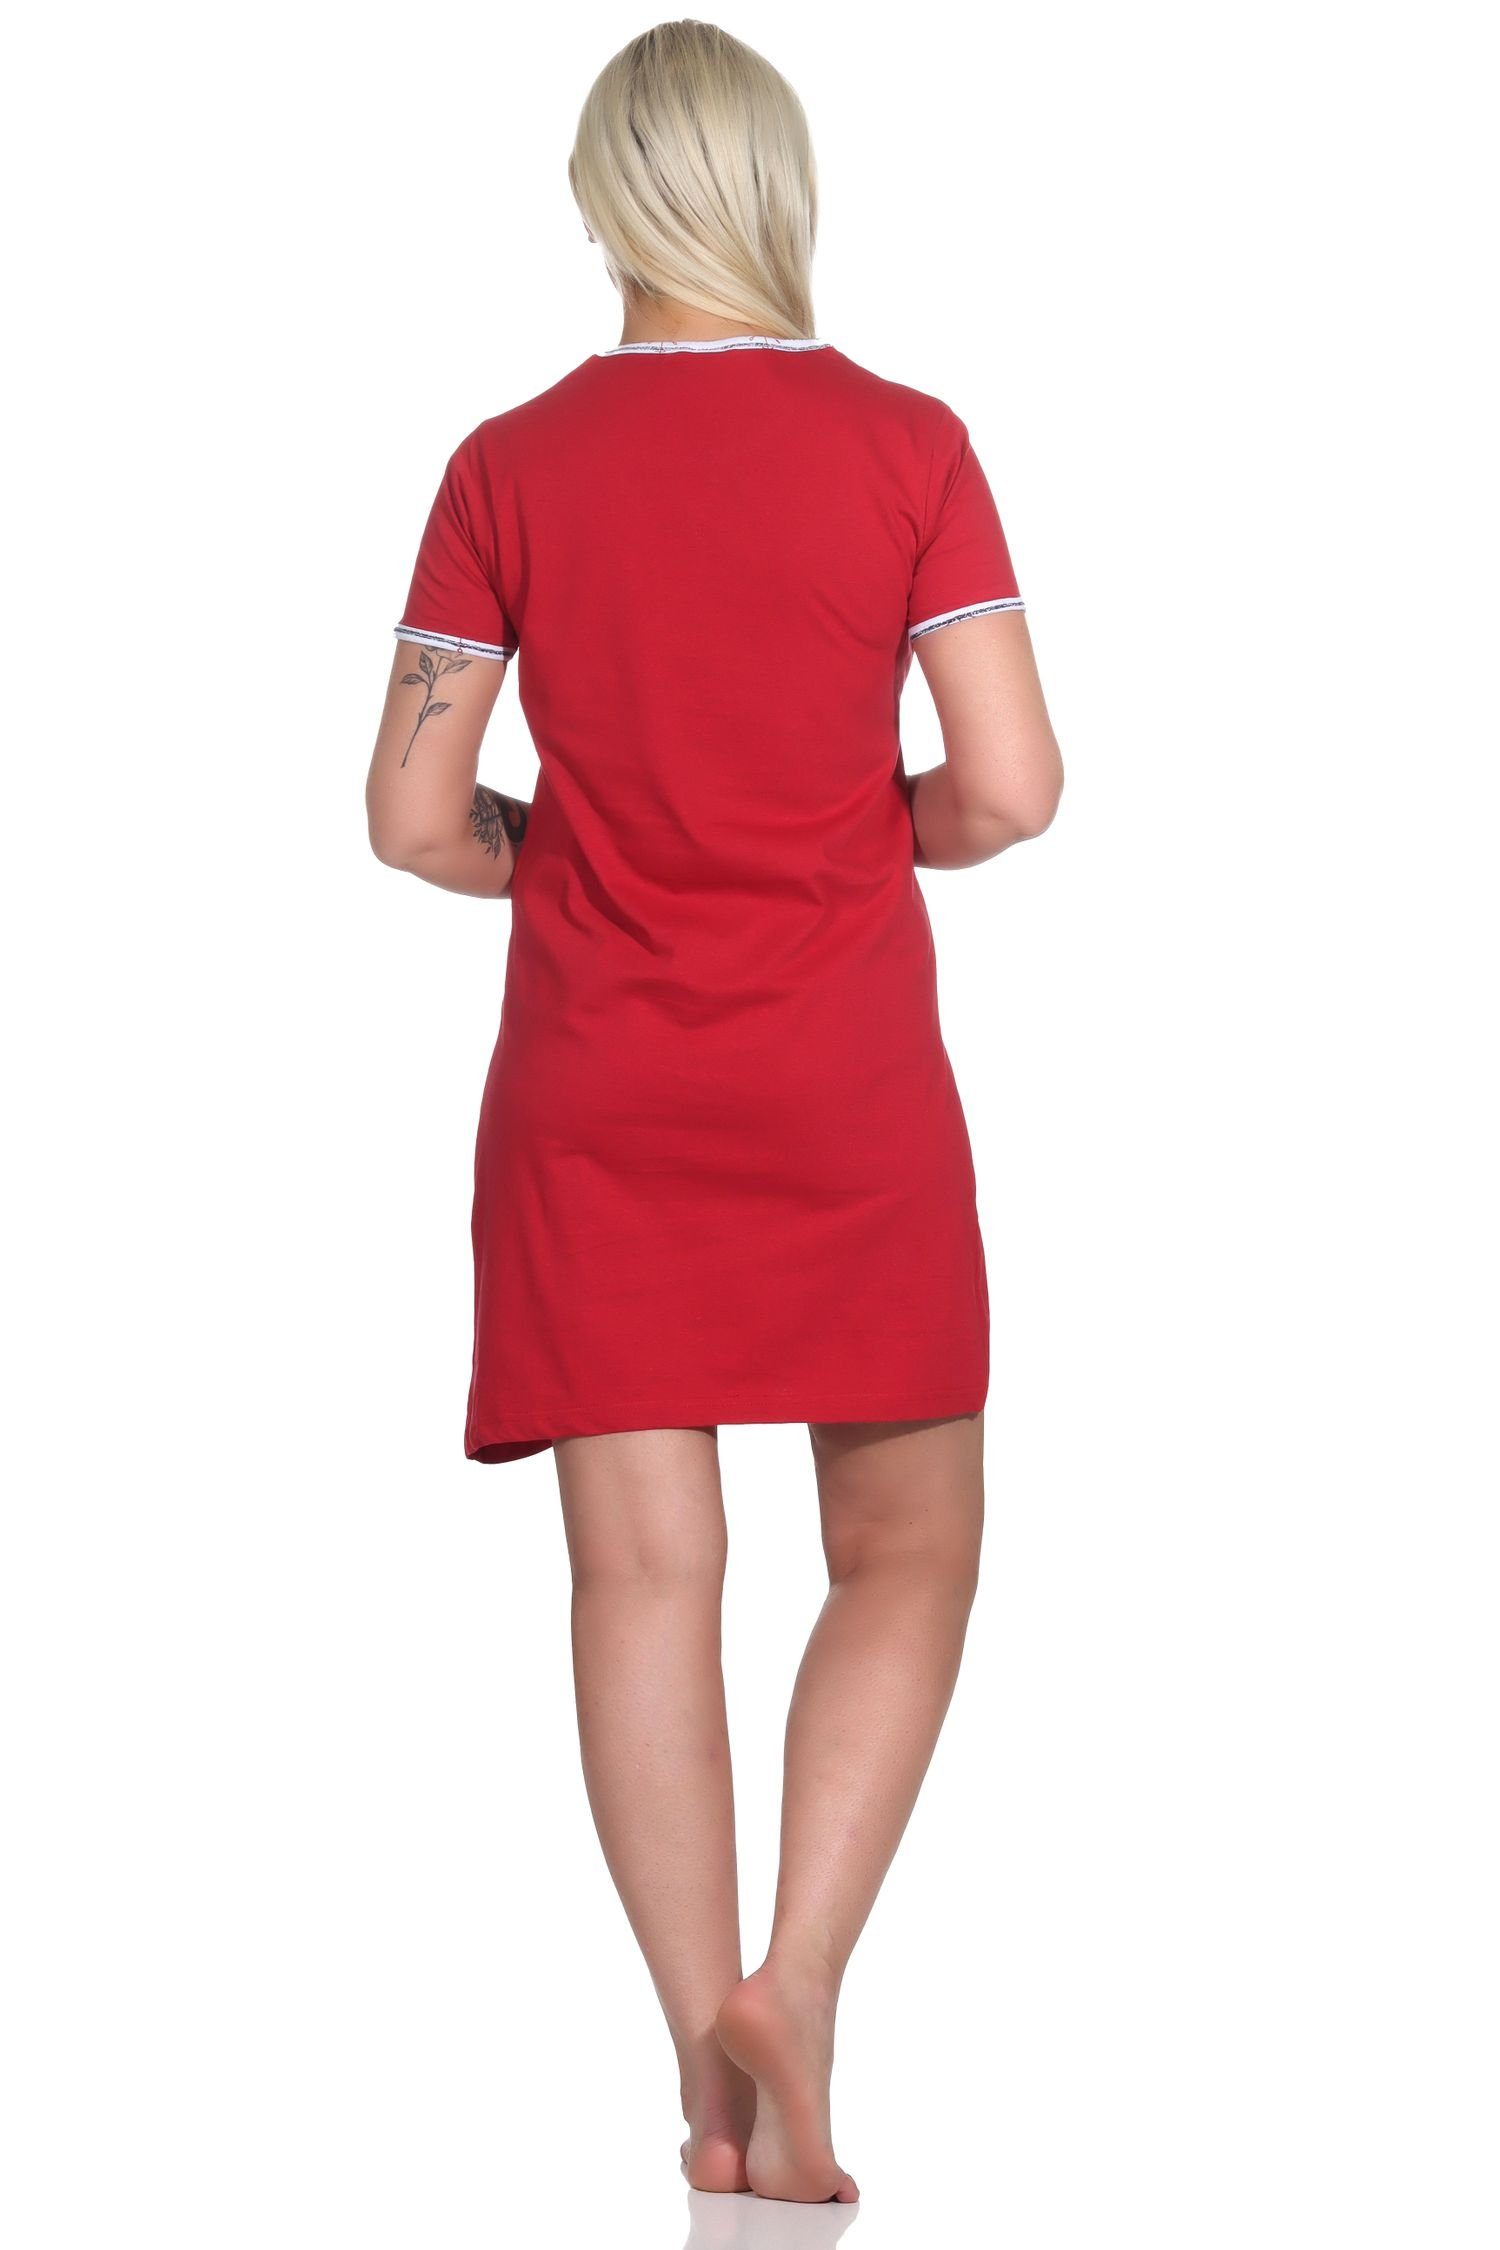 Normann Nachthemd Maritimes rot mit Nachthemd, kurzärmliges Rundhals Damen Bigshirt